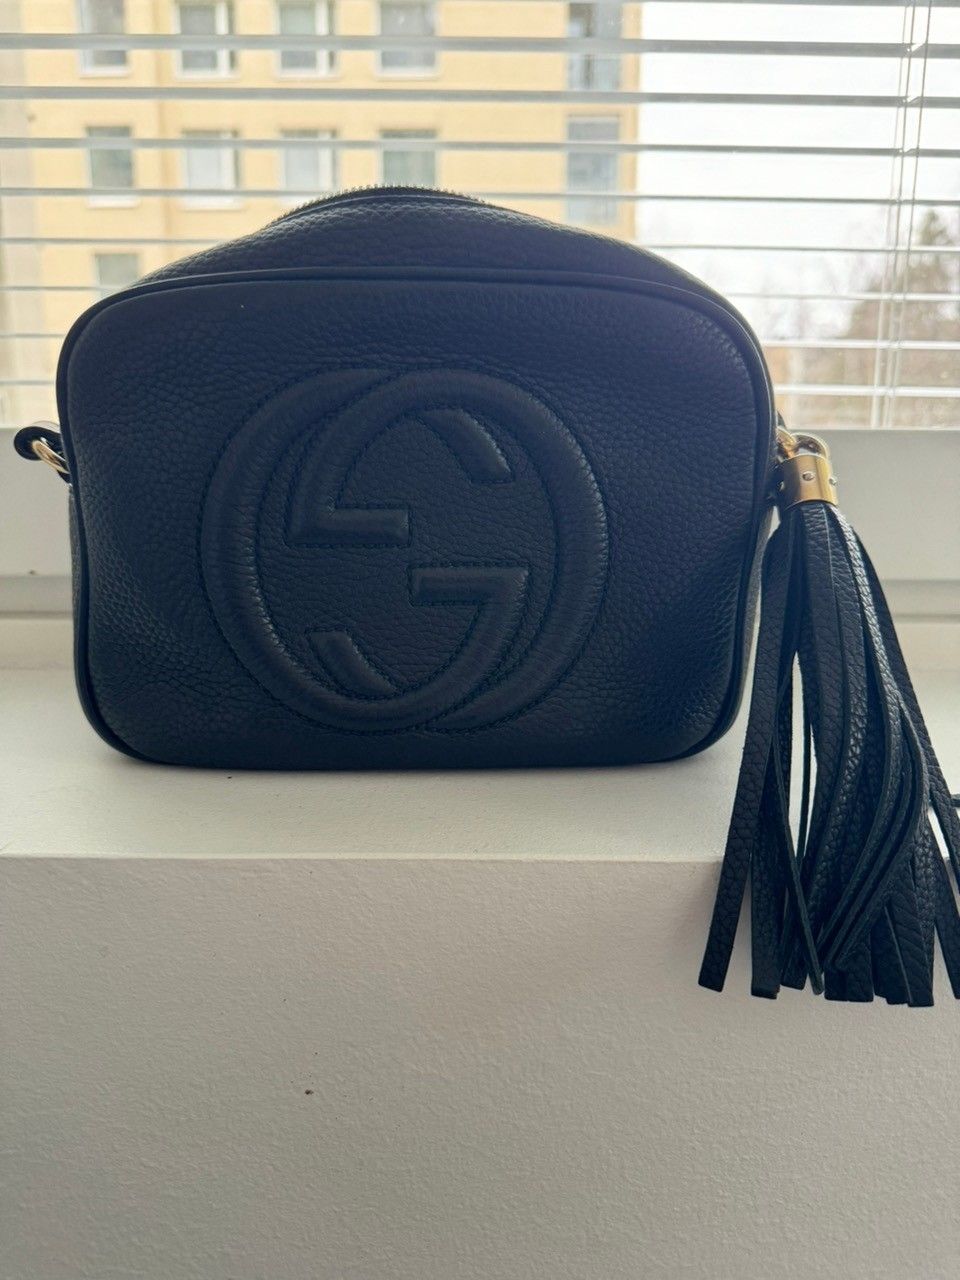 Gucci Soho bag